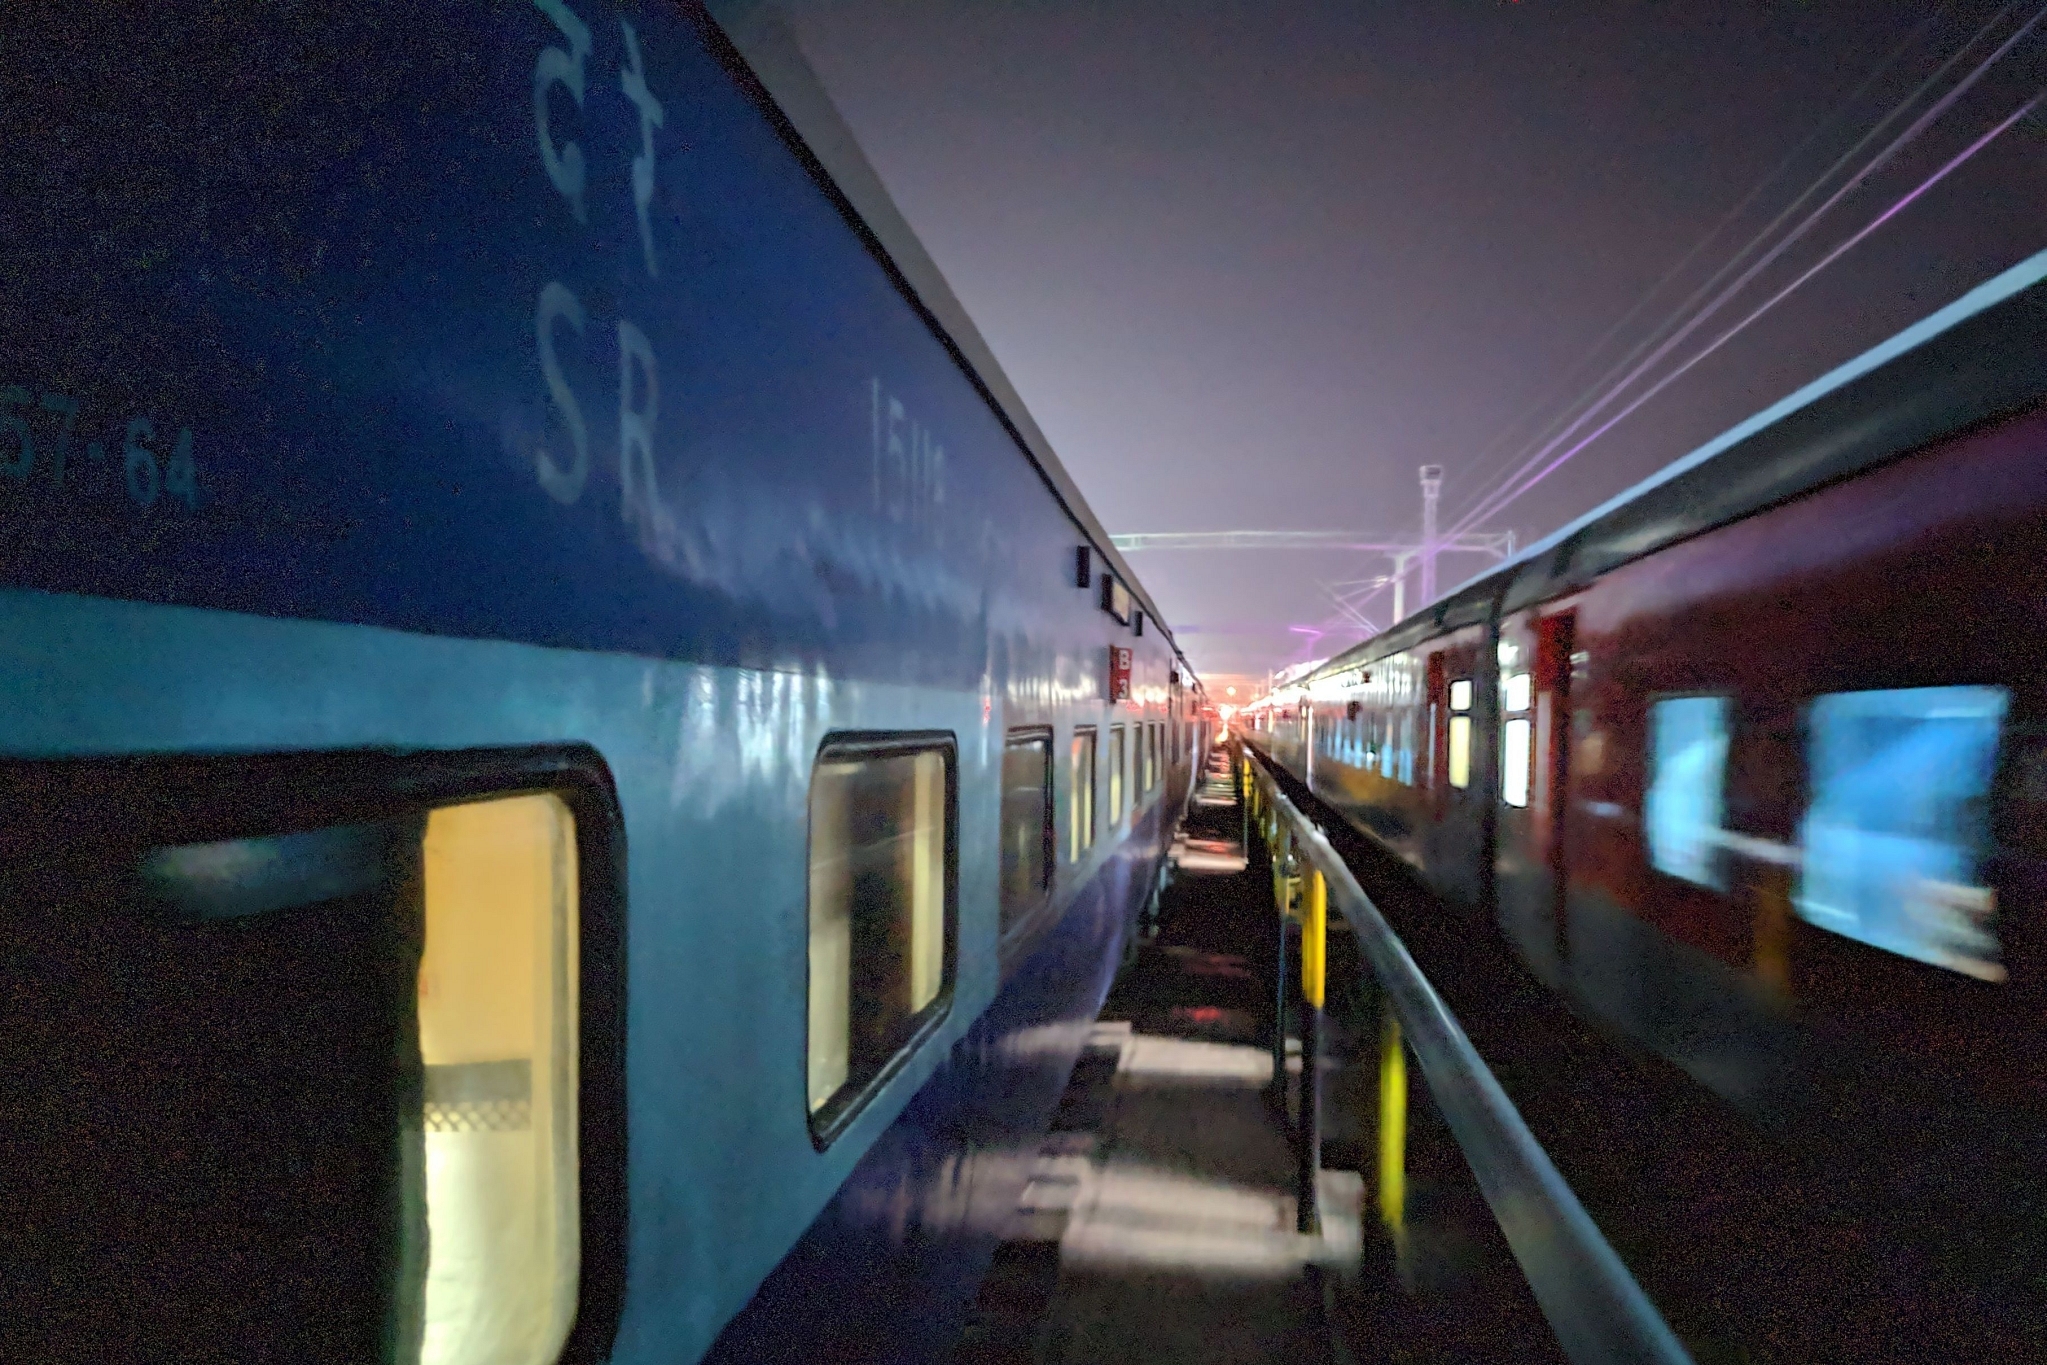 Indian Railways’ new service to meet rising demand.